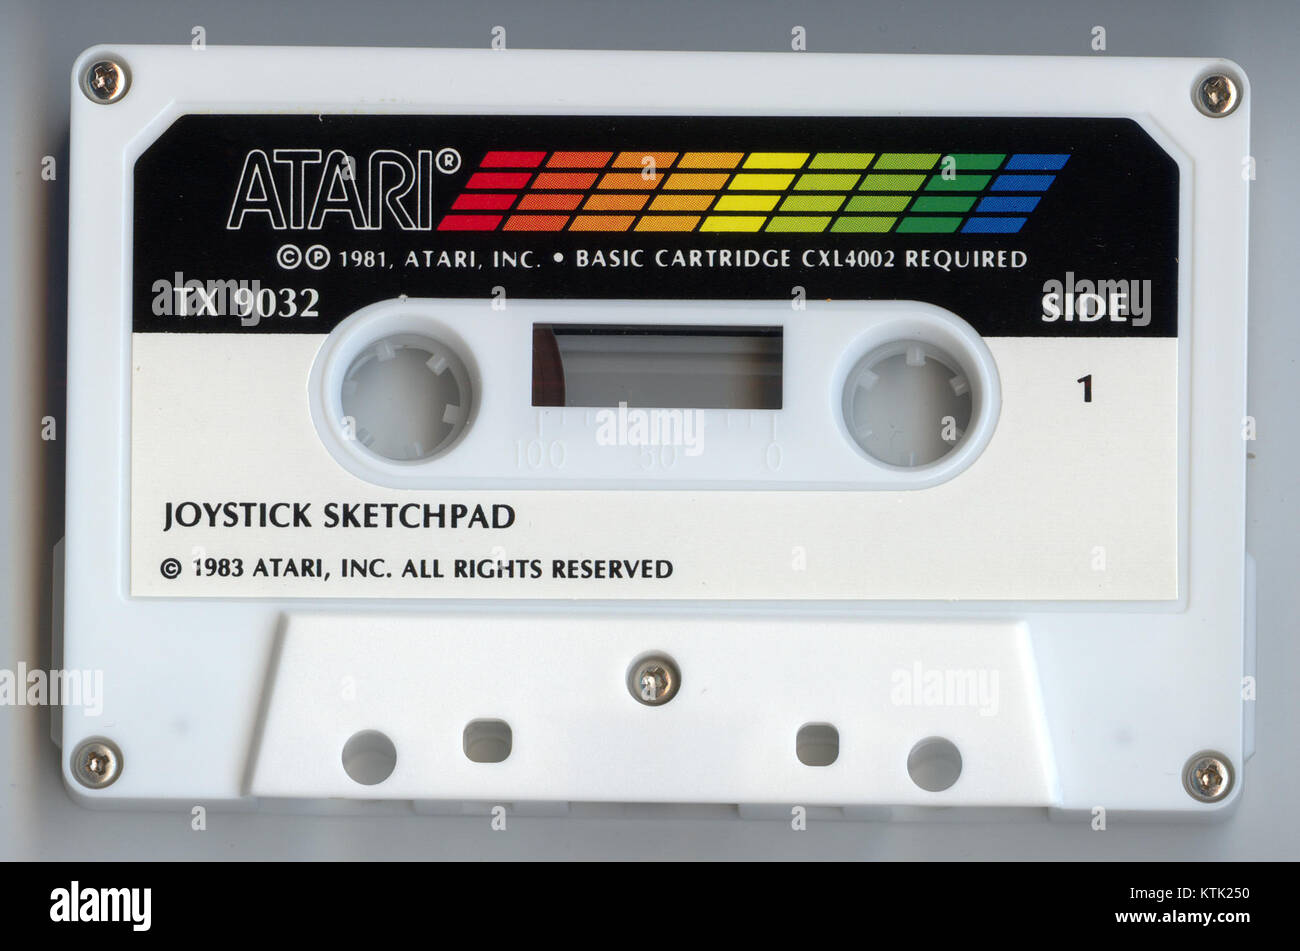 Atari Computer Program Cassette Joystick Sketchpad TX 9032 Stock Photo